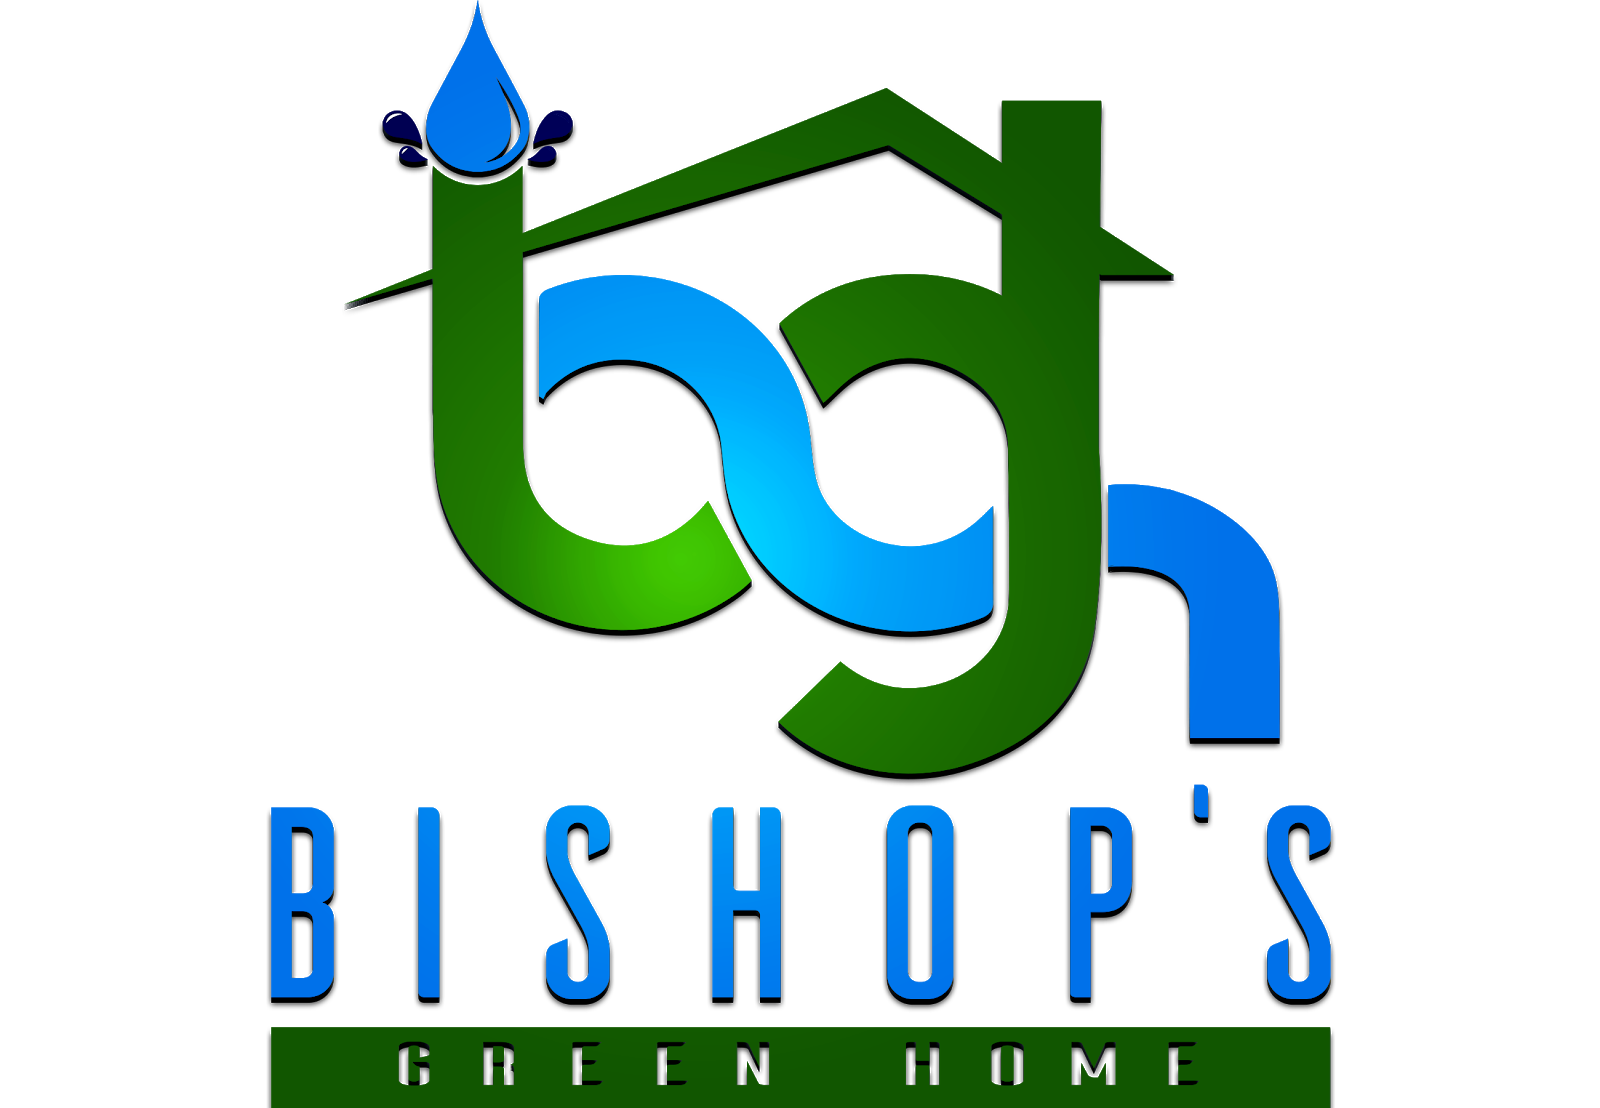 Bishop's Green Home